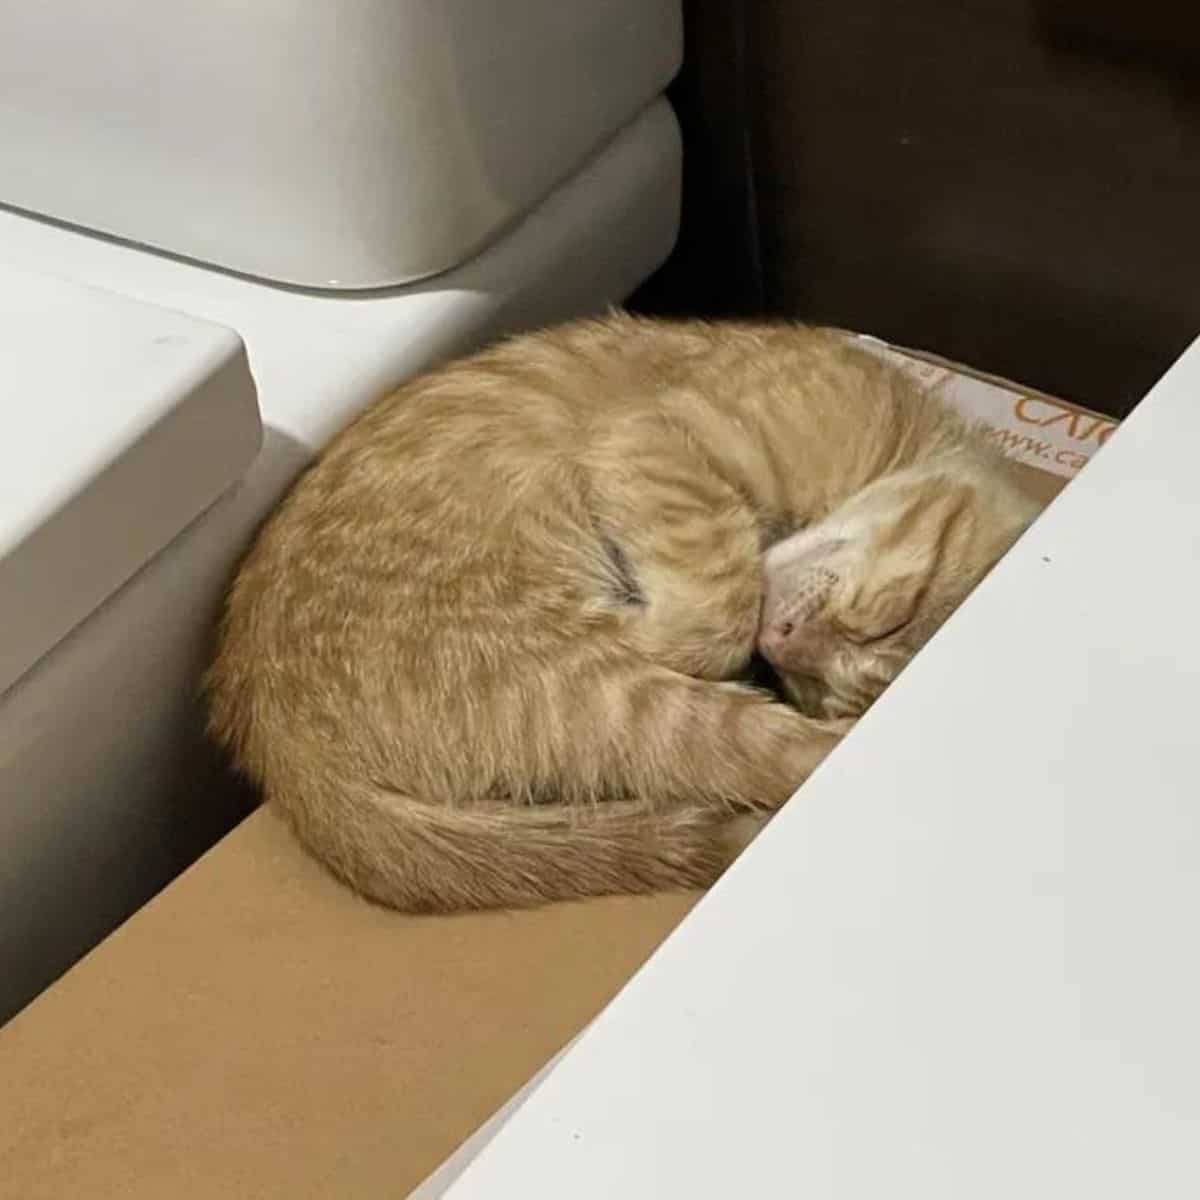 ginger kitten curled up sleeping